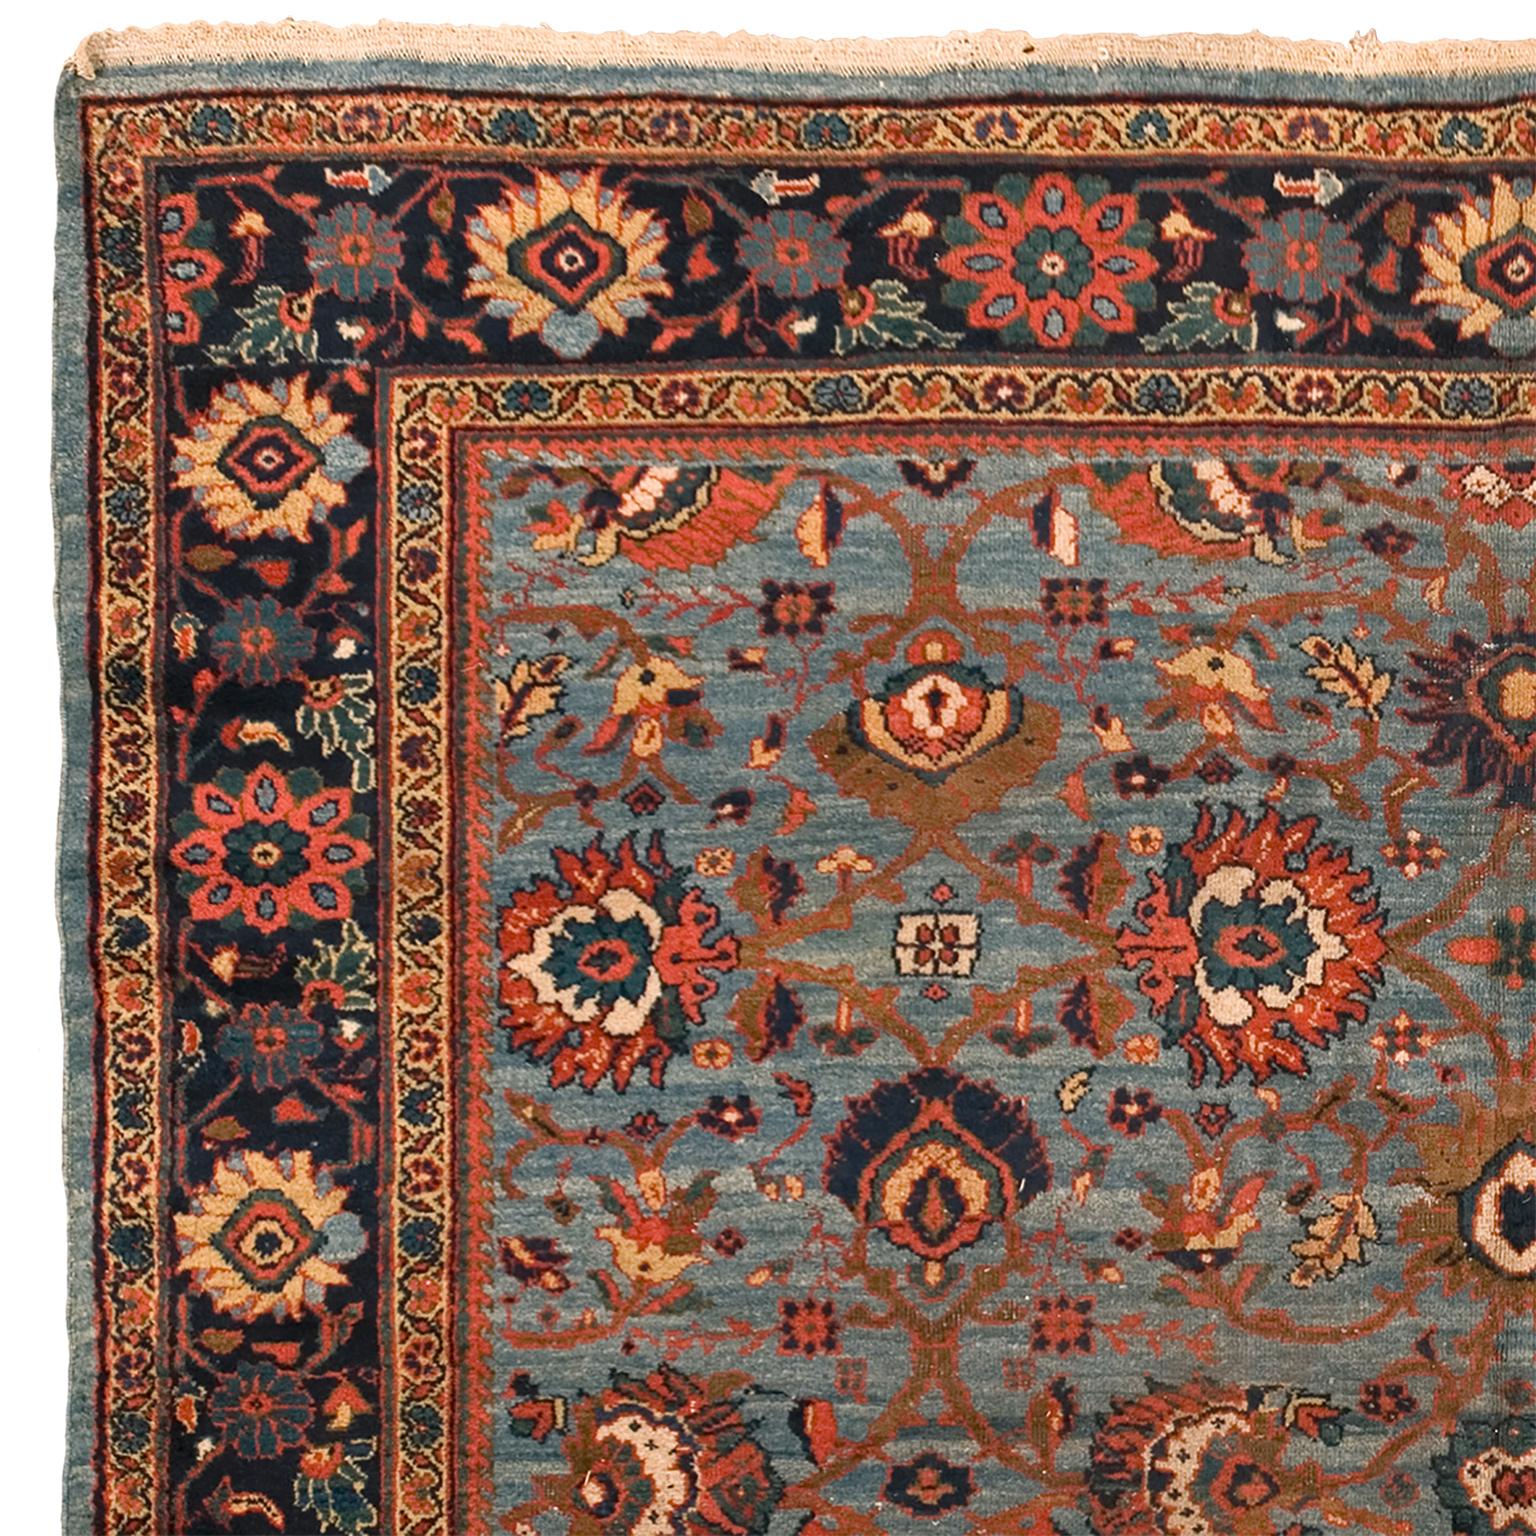 Mid-20th century Persian Mahal rug
Persian, circa 1930
Handwoven.